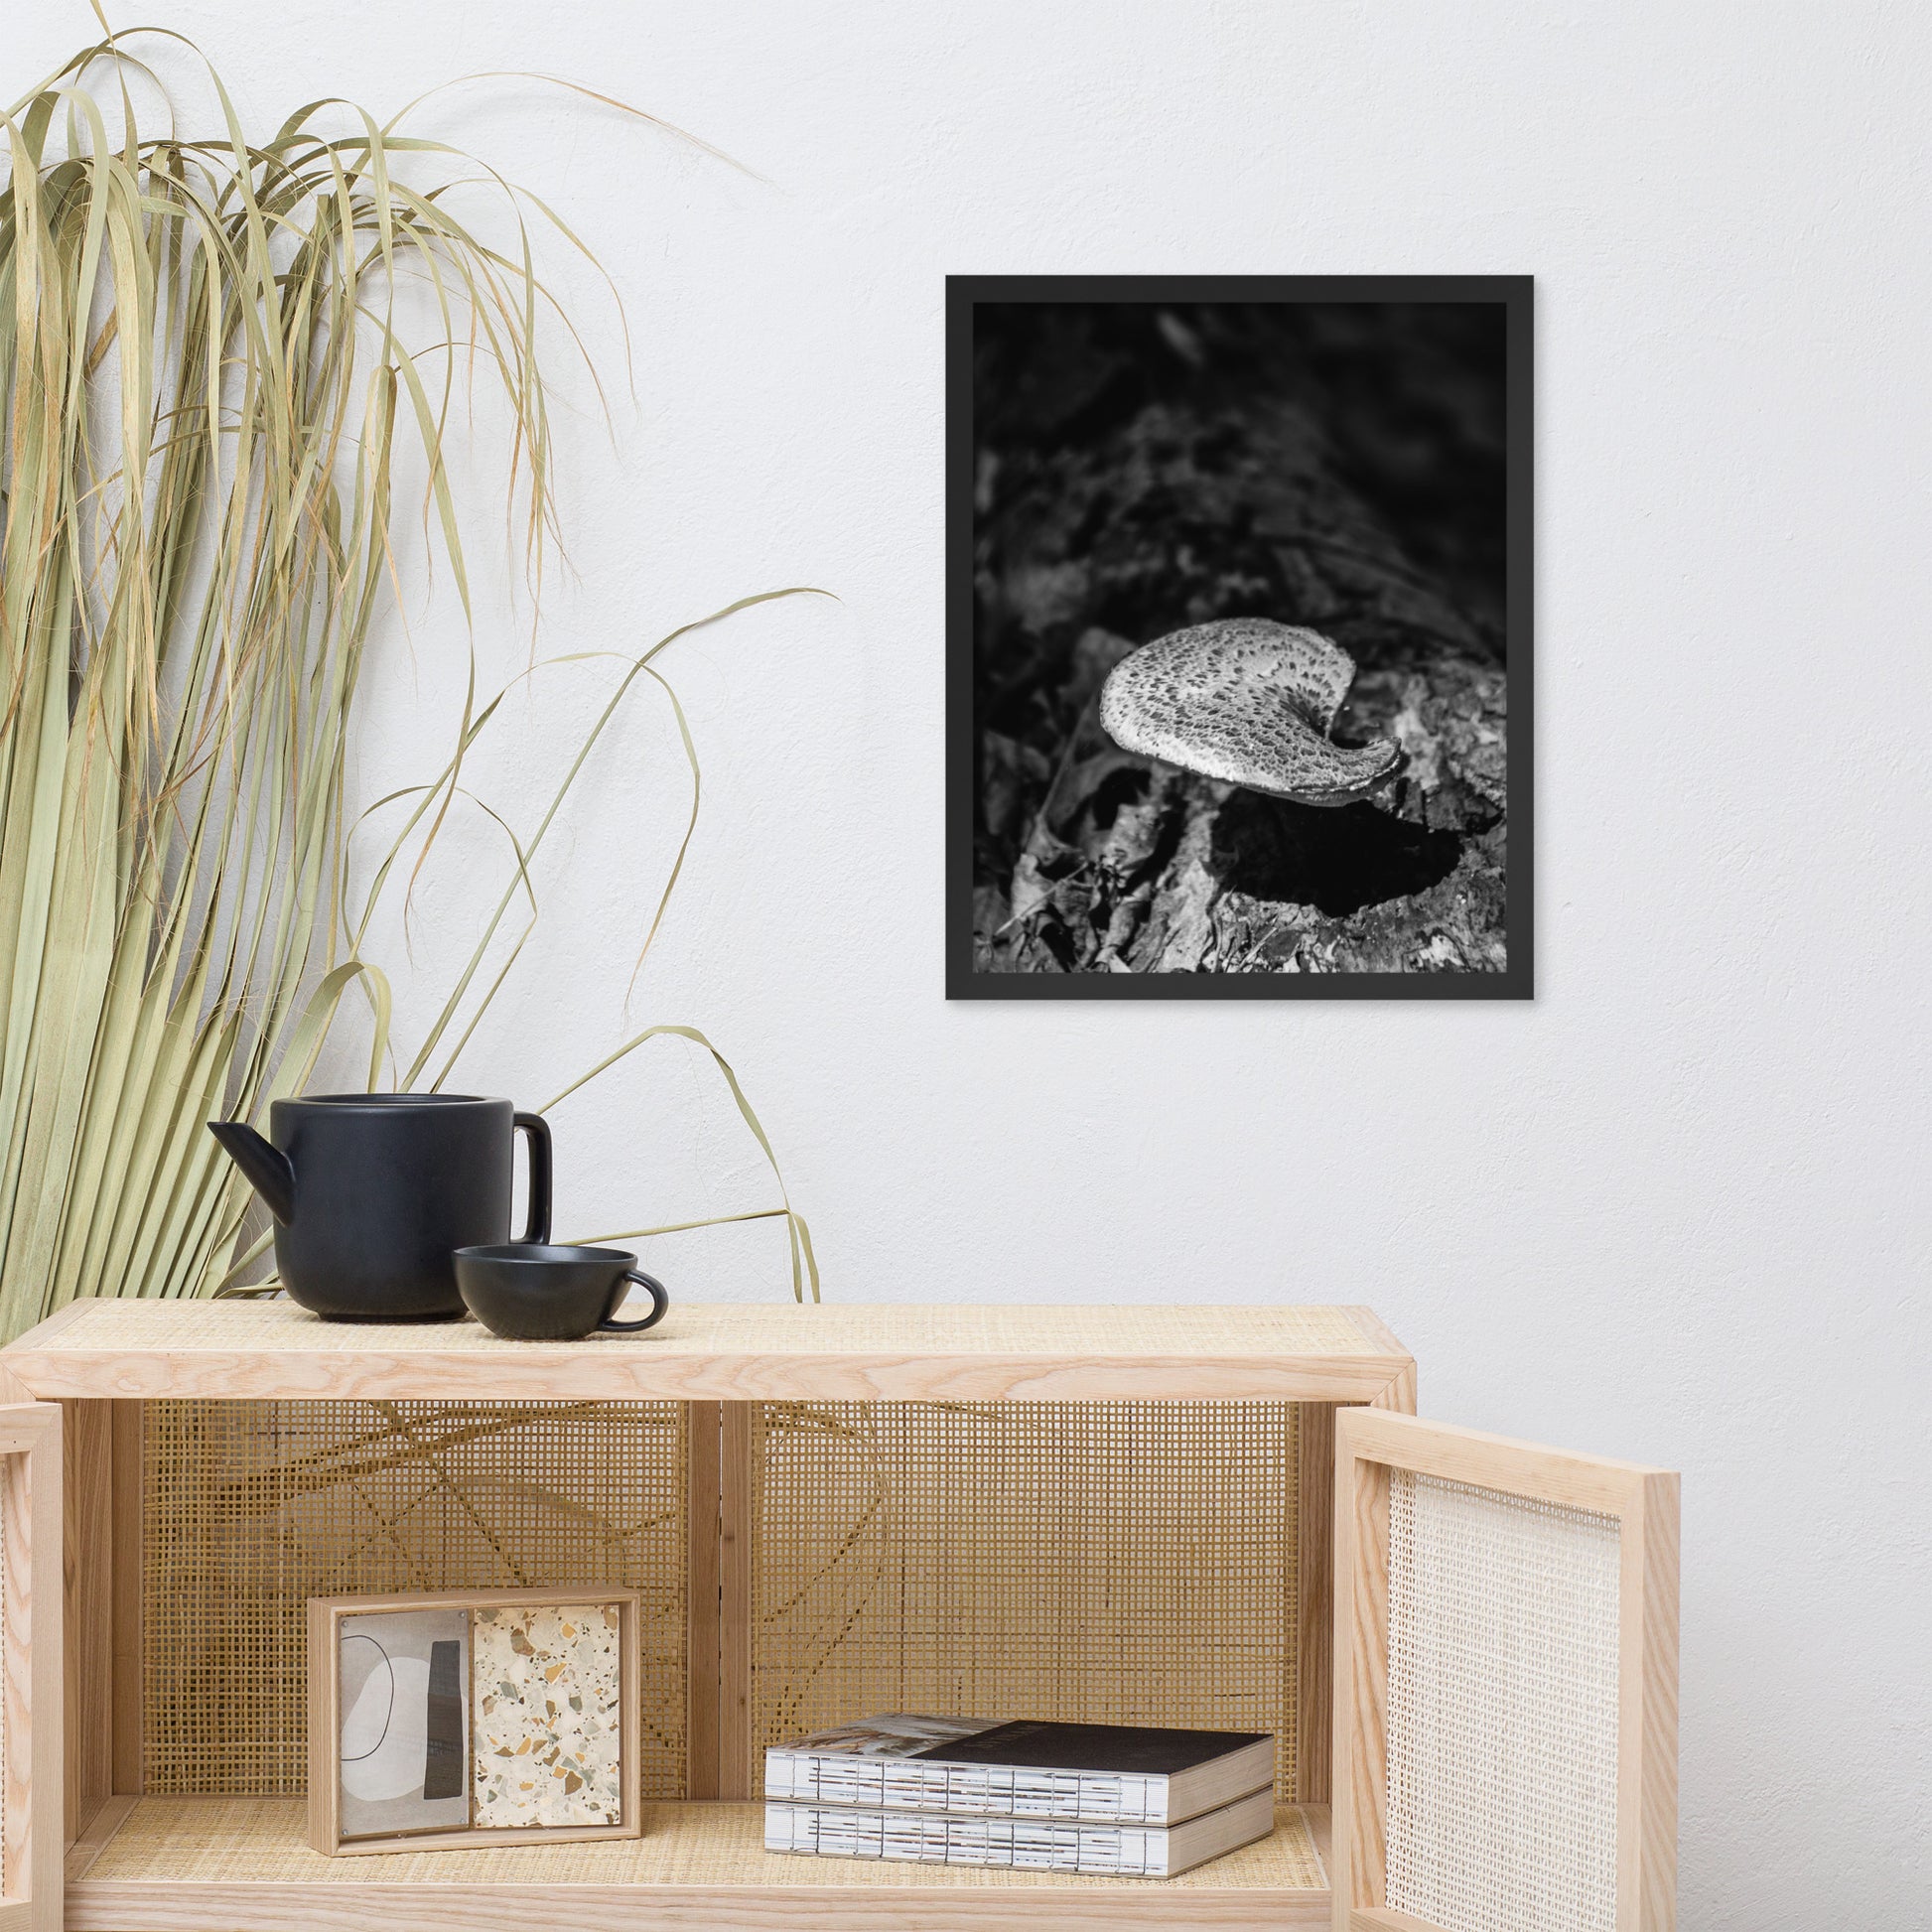 Rustic Farmhouse Prints: Mushroom on Log in Black and White Botanical Nature Photo Framed Wall Art Print